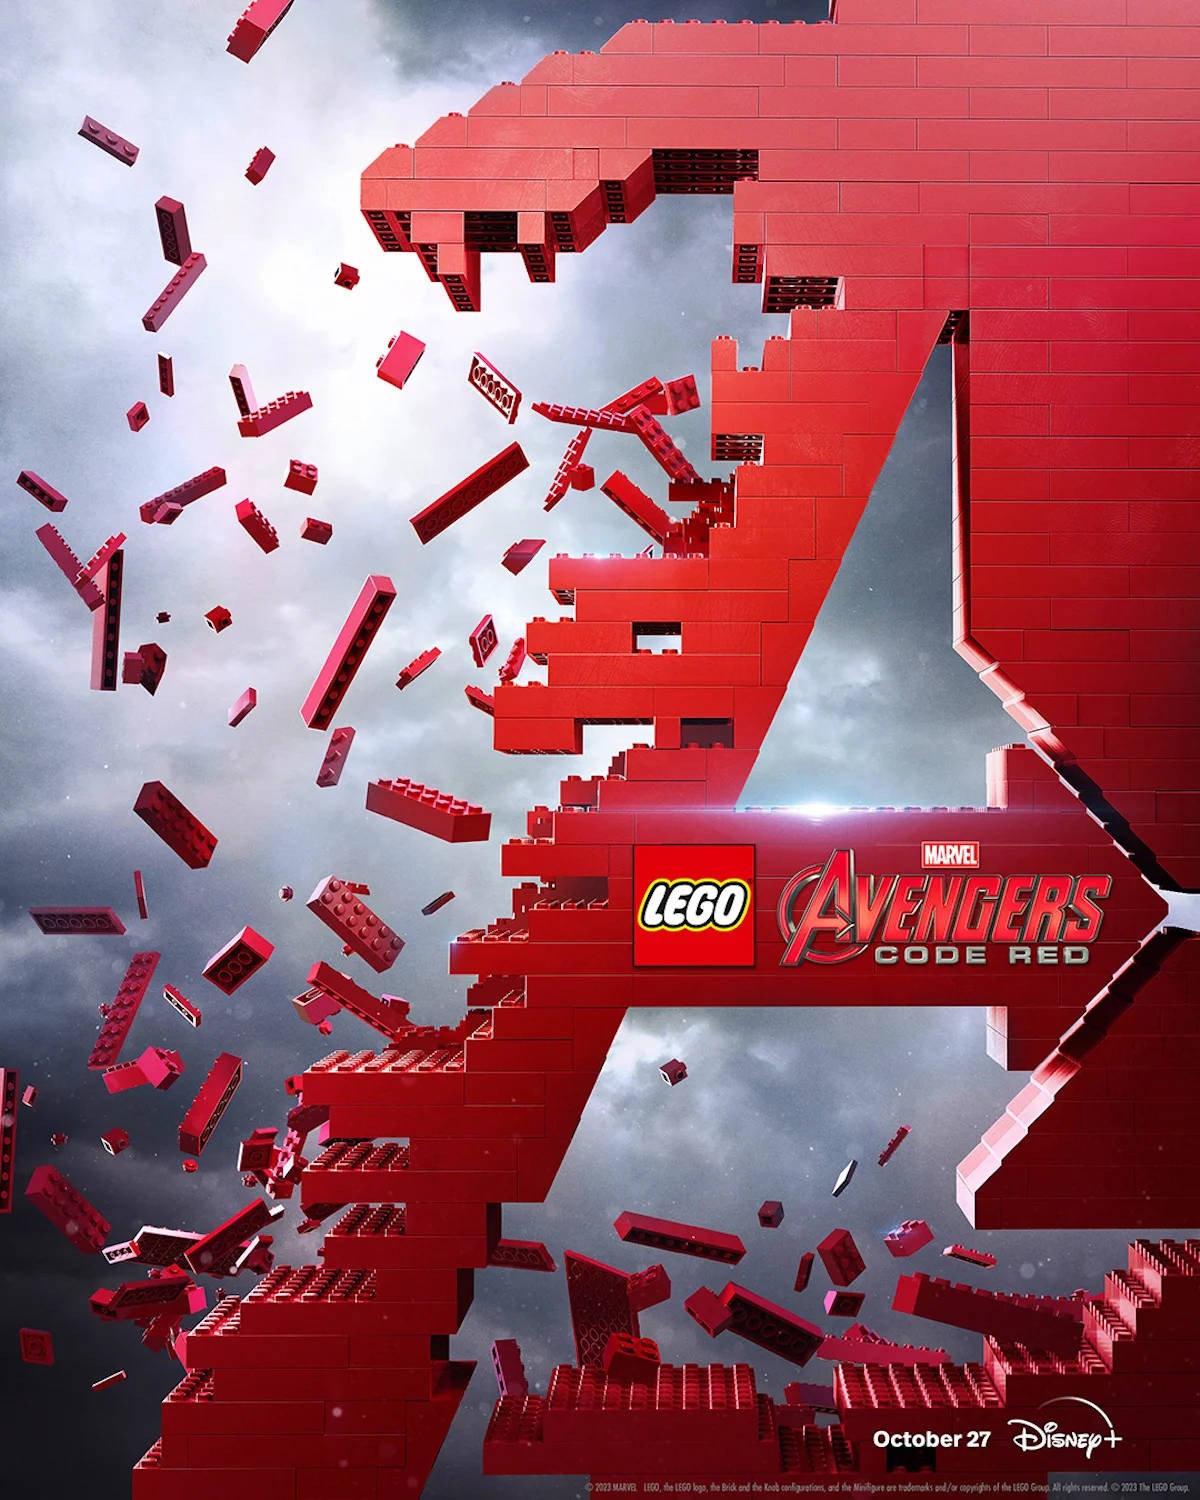 Disney анонсировала спецэпизод с коллаборацией LEGO и «Мстителей» Marvel - фото 1